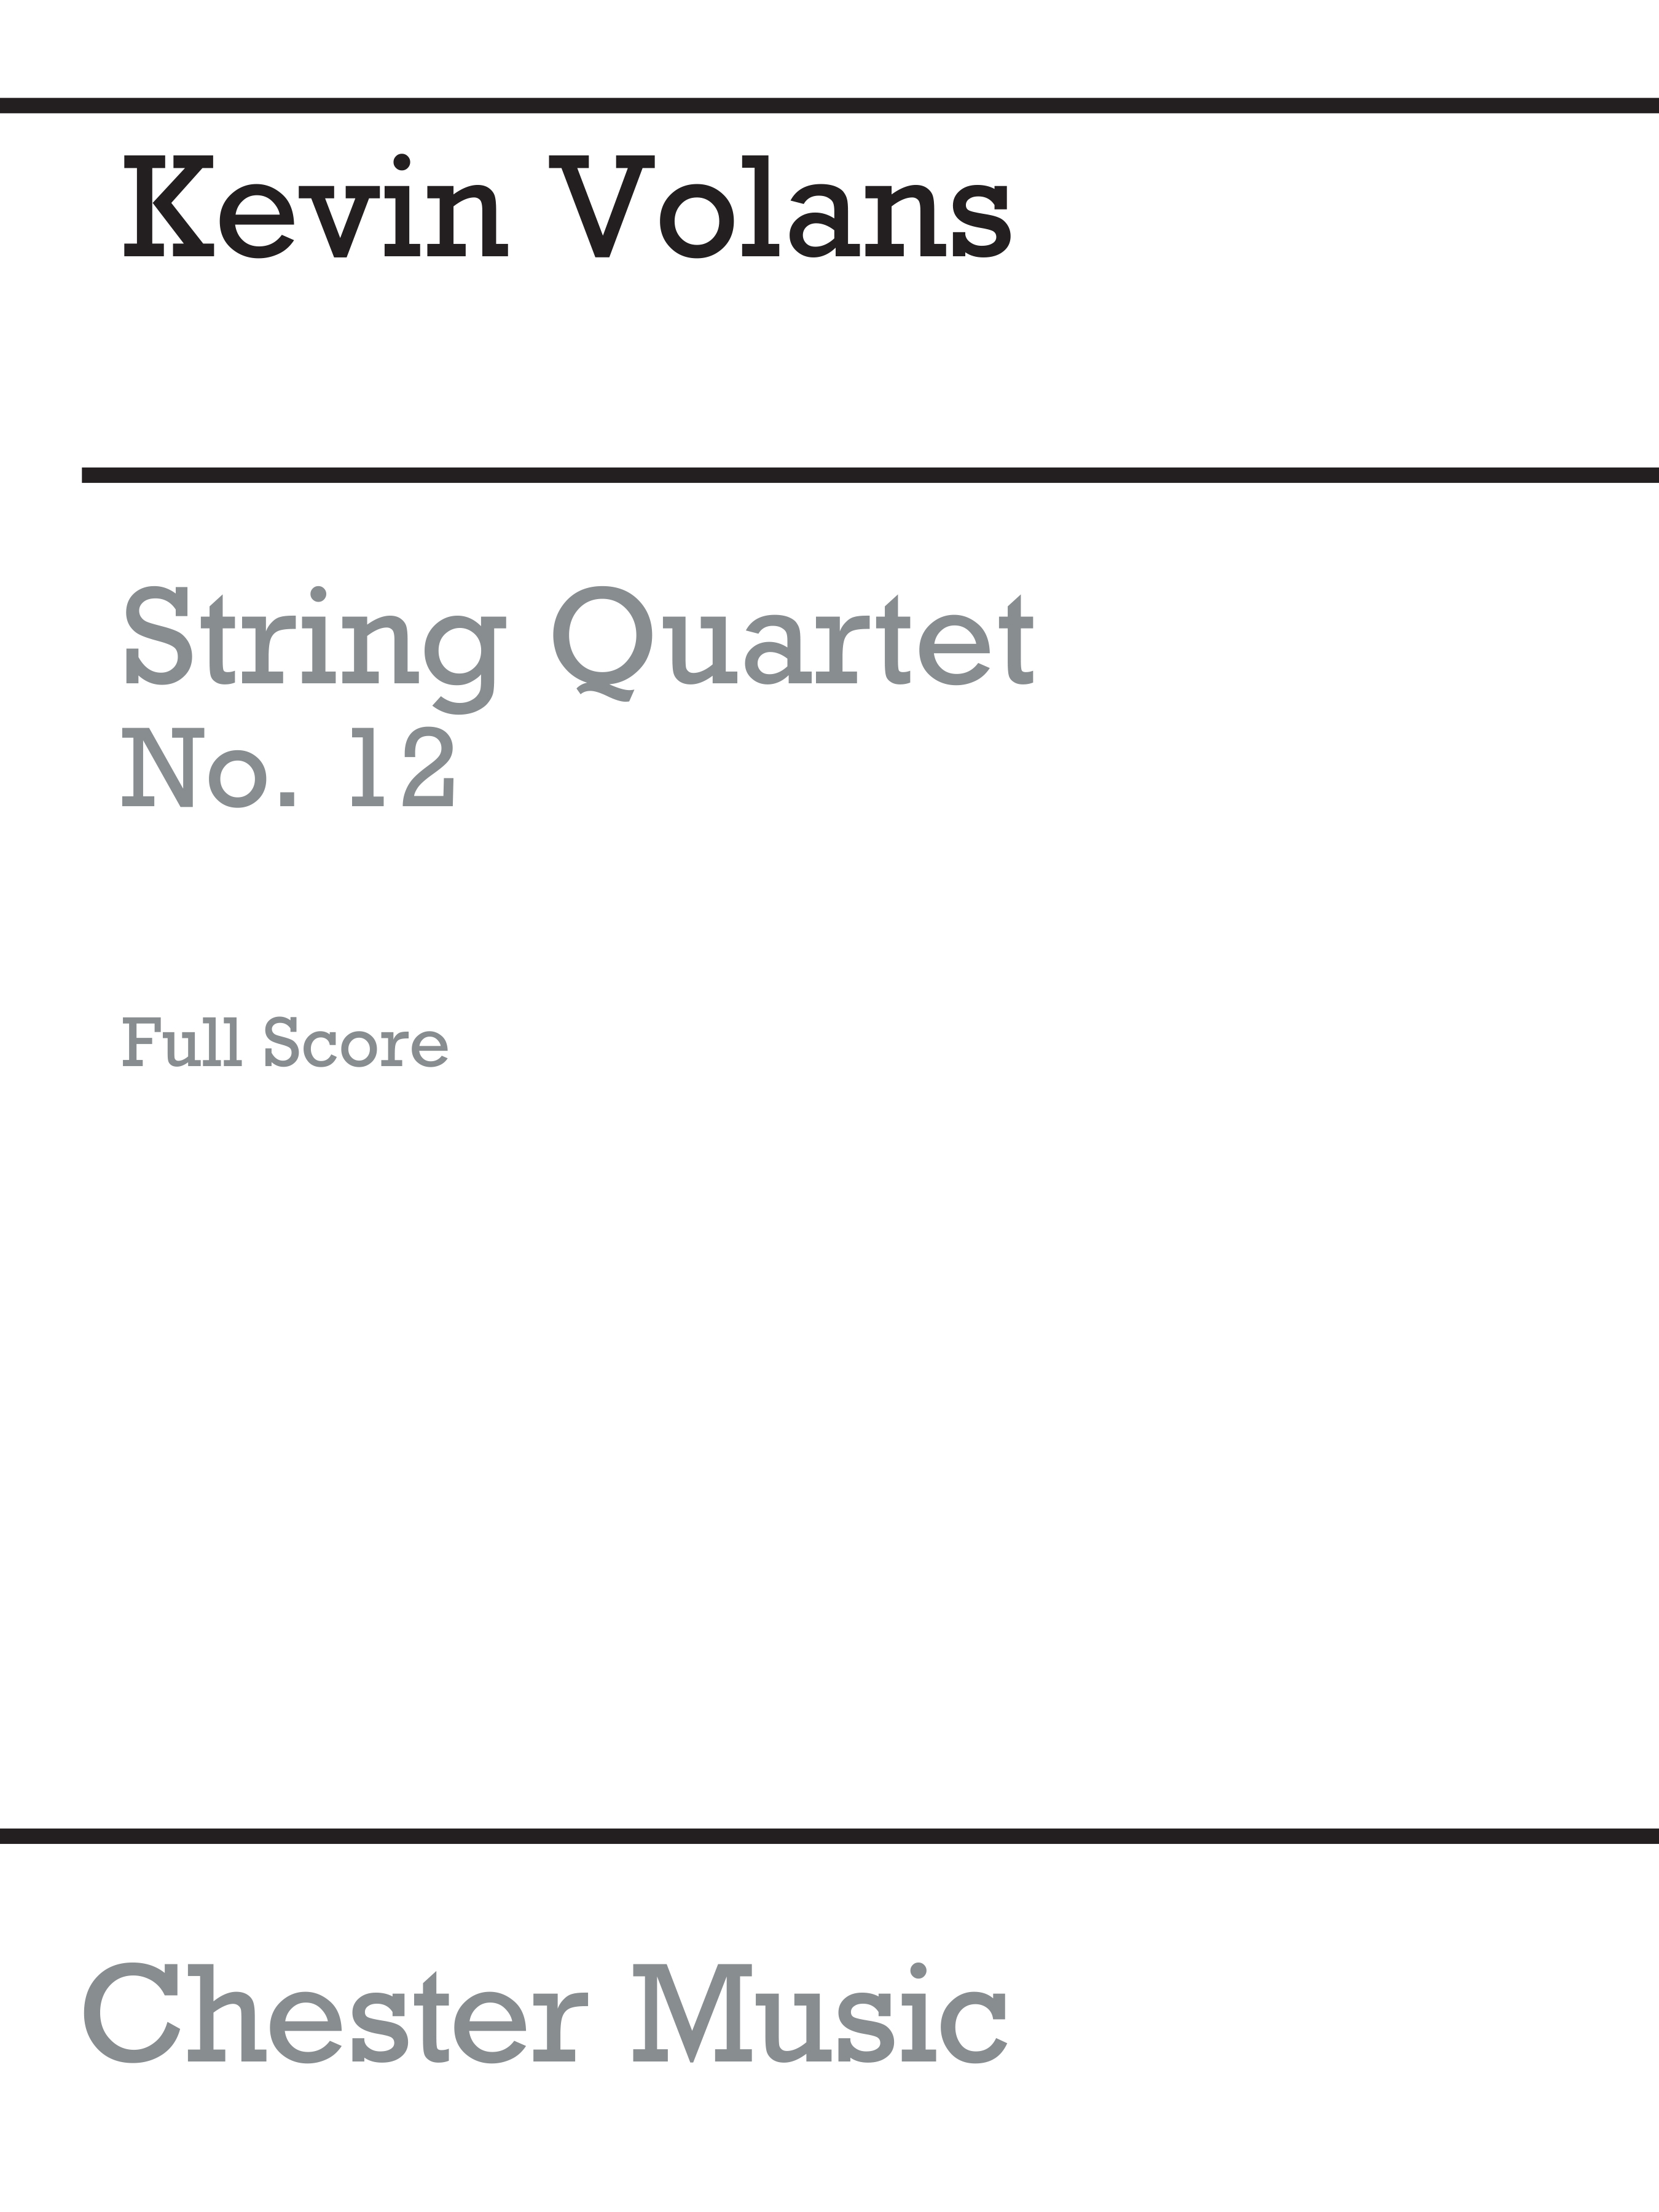 String Quartet No.12 (VOLANS KEVIN)